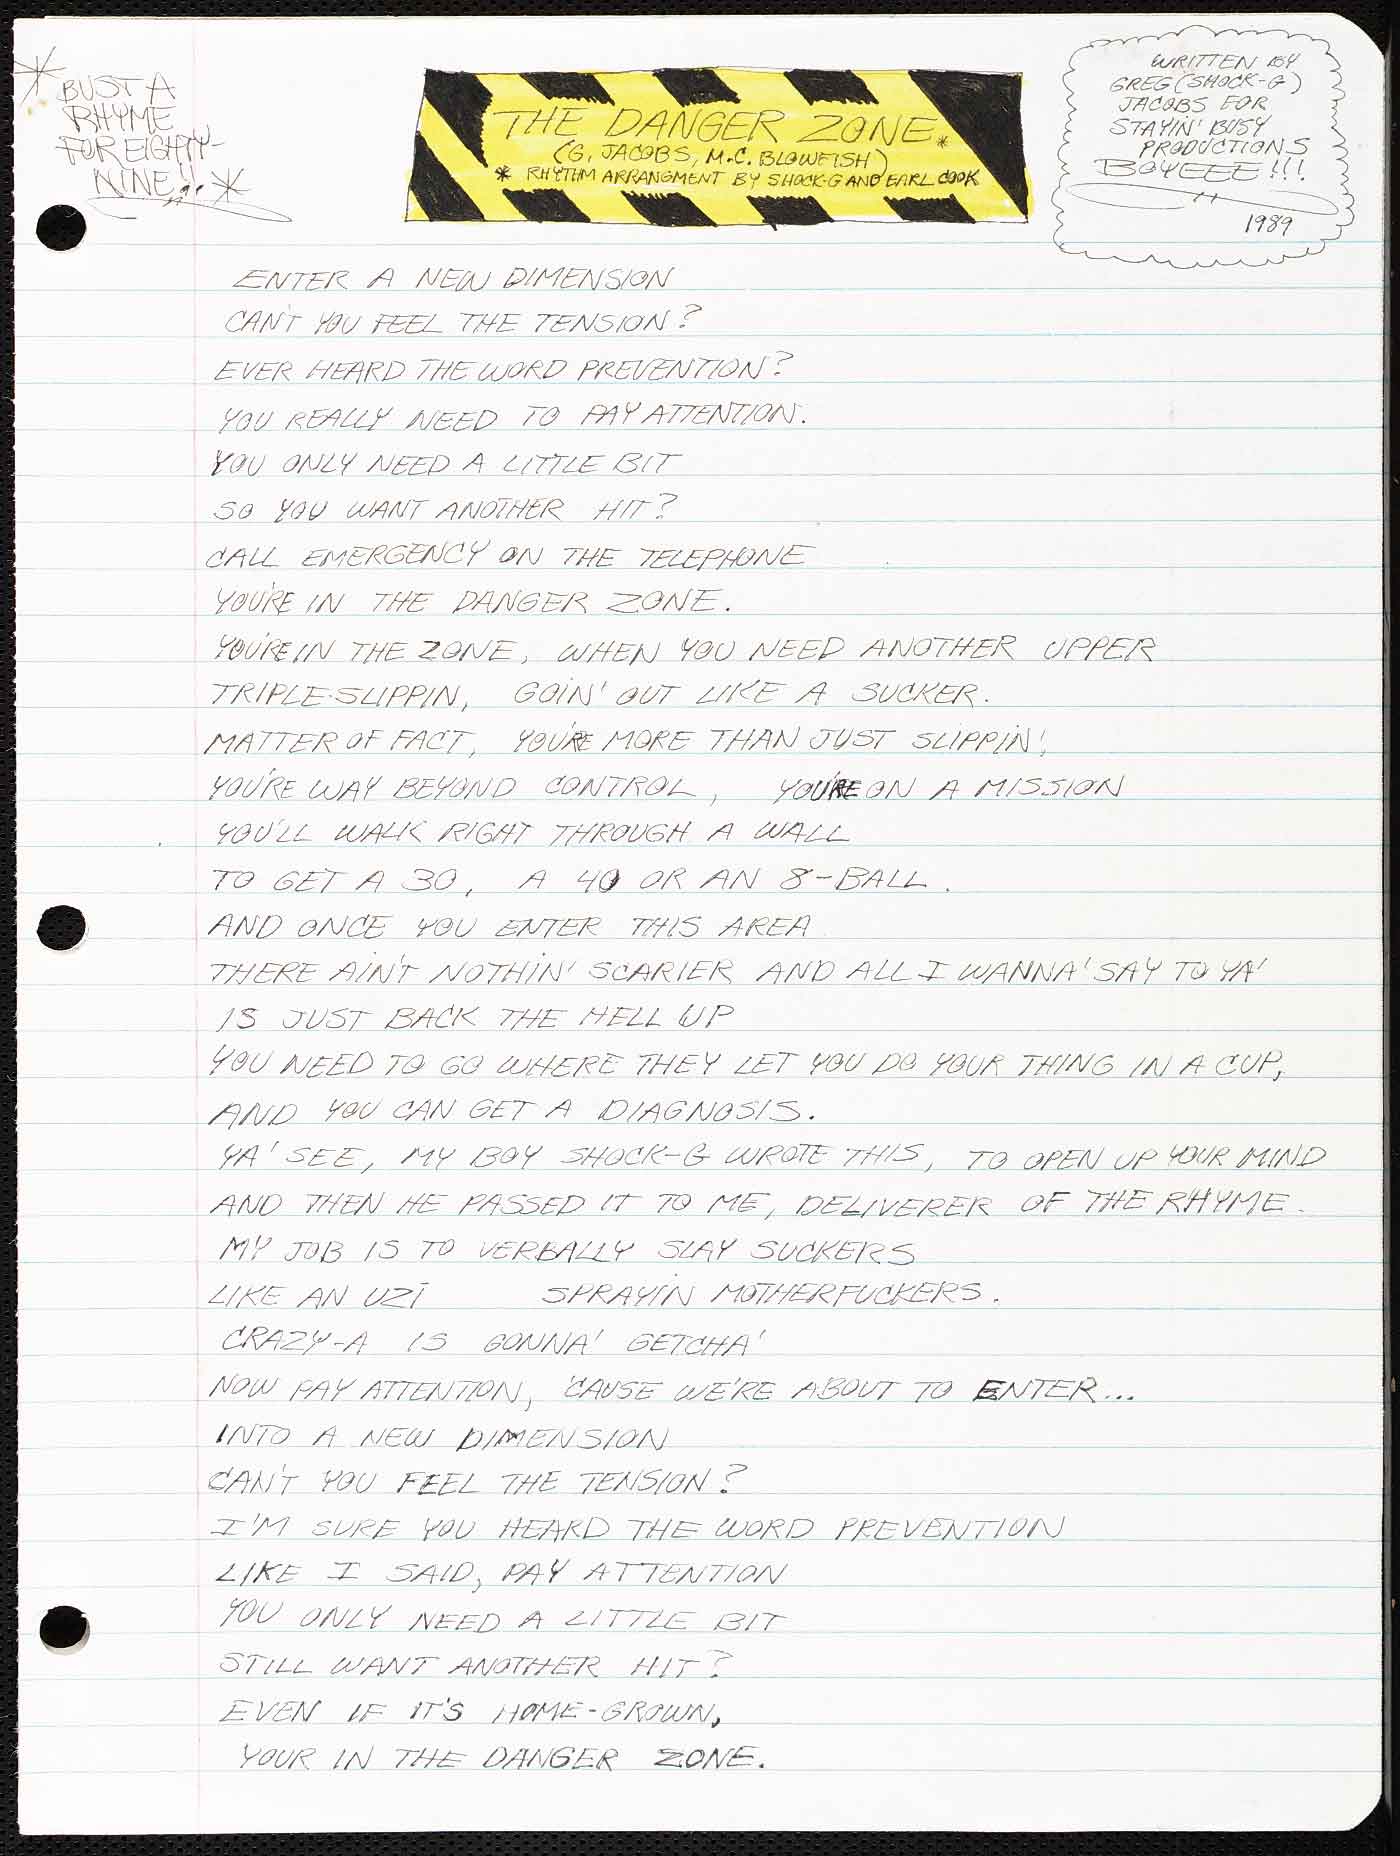 "The Danger Zone" Handwritten Lyrics by Shock G, 1989